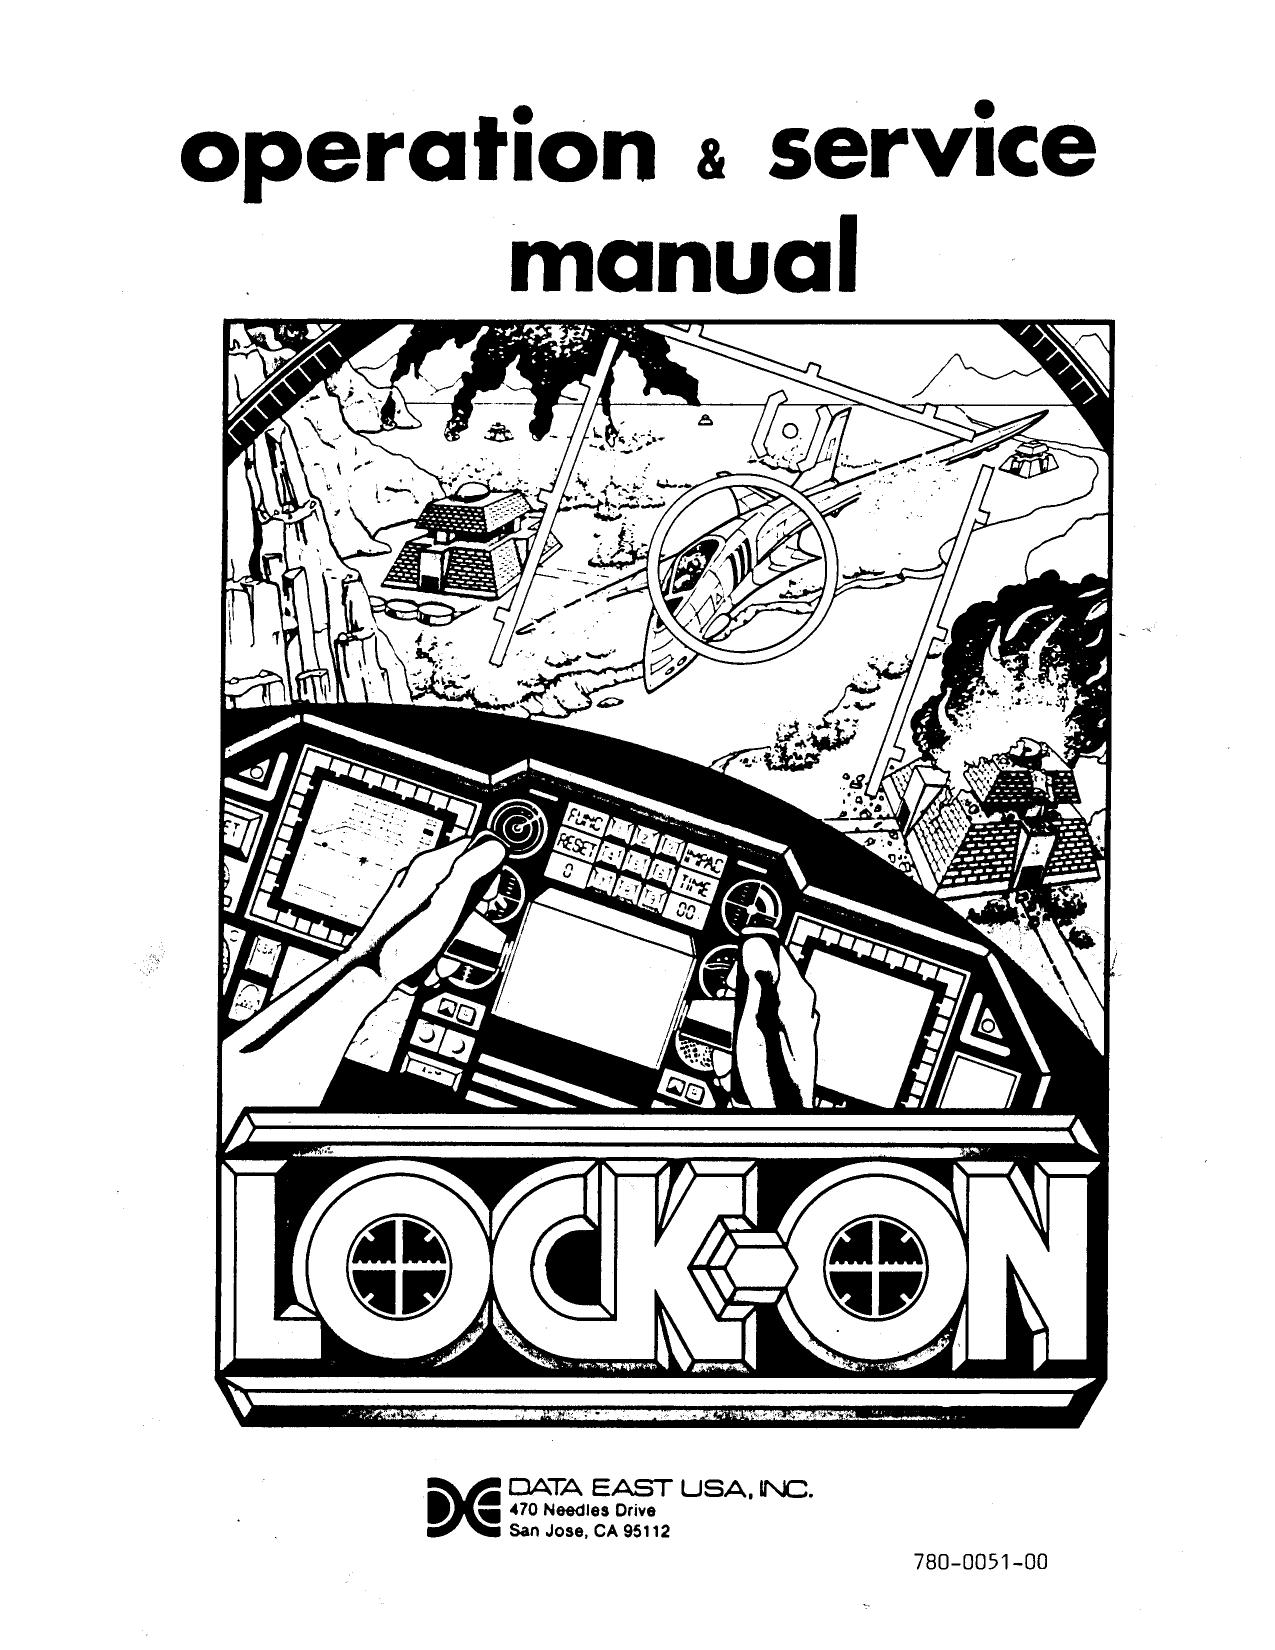 LockOn Manual